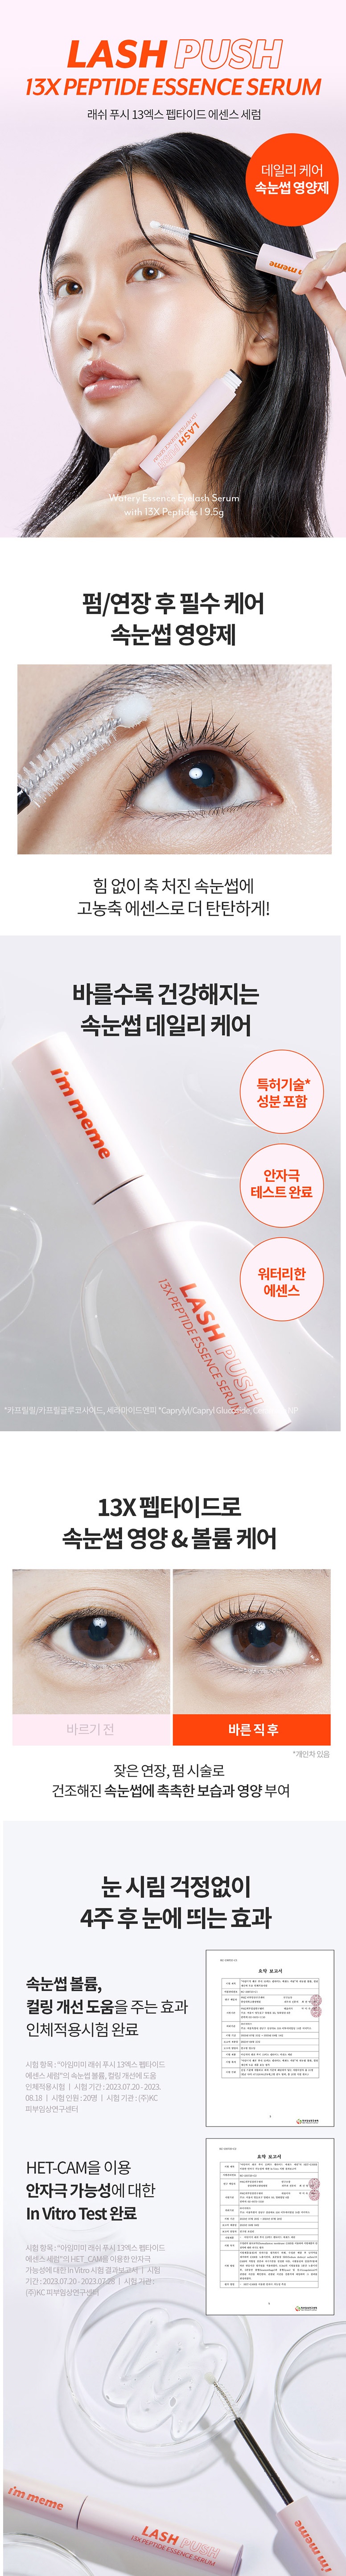 MEMEBOX Lash Push 13X Peptide Essence Serum korean skincare product online shop malaysia china macau1